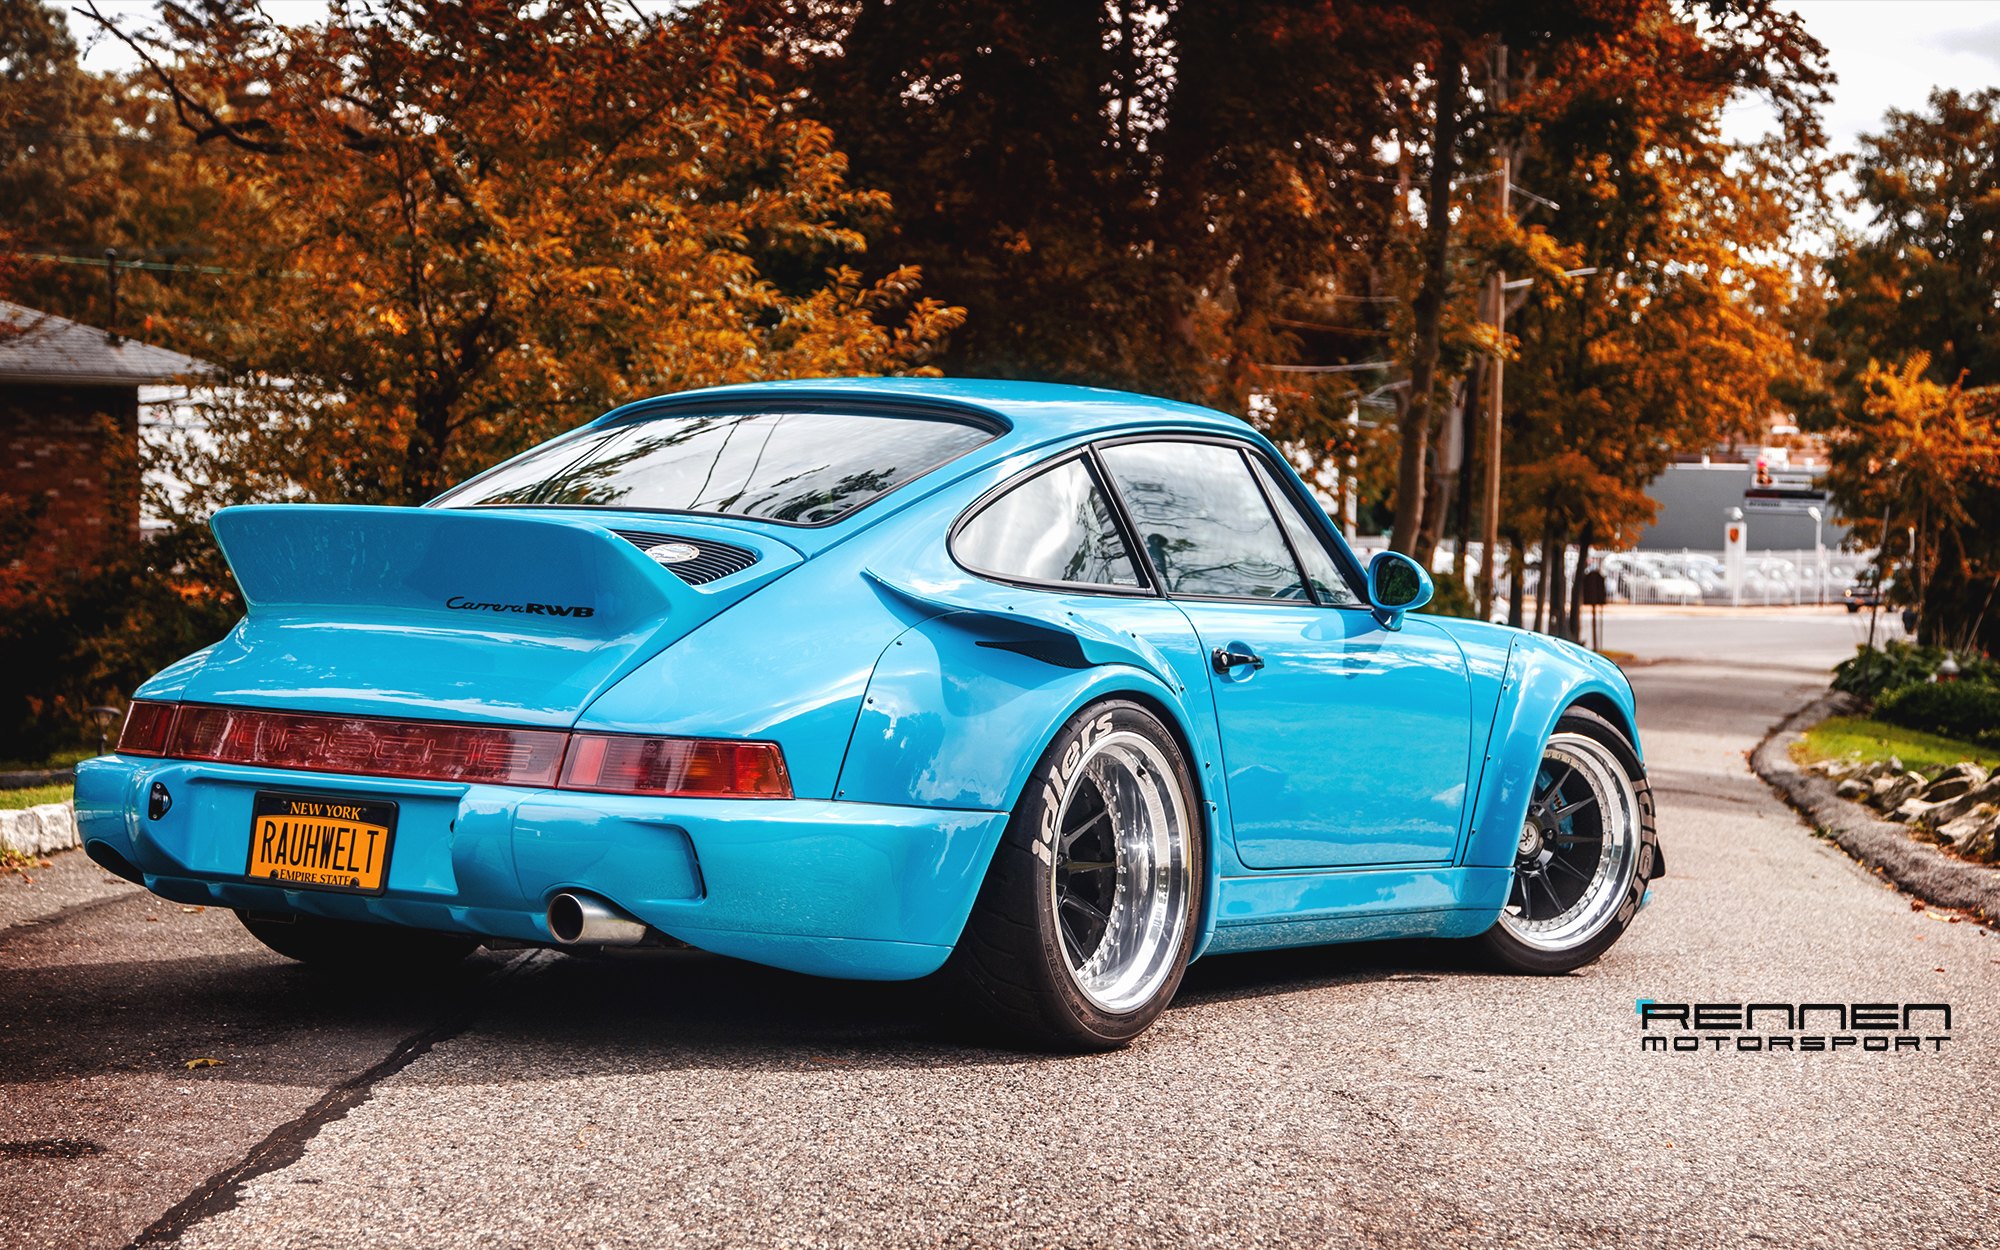 Large Rear Spoiler on Blue Porsche 911 - Photo by Rennen International